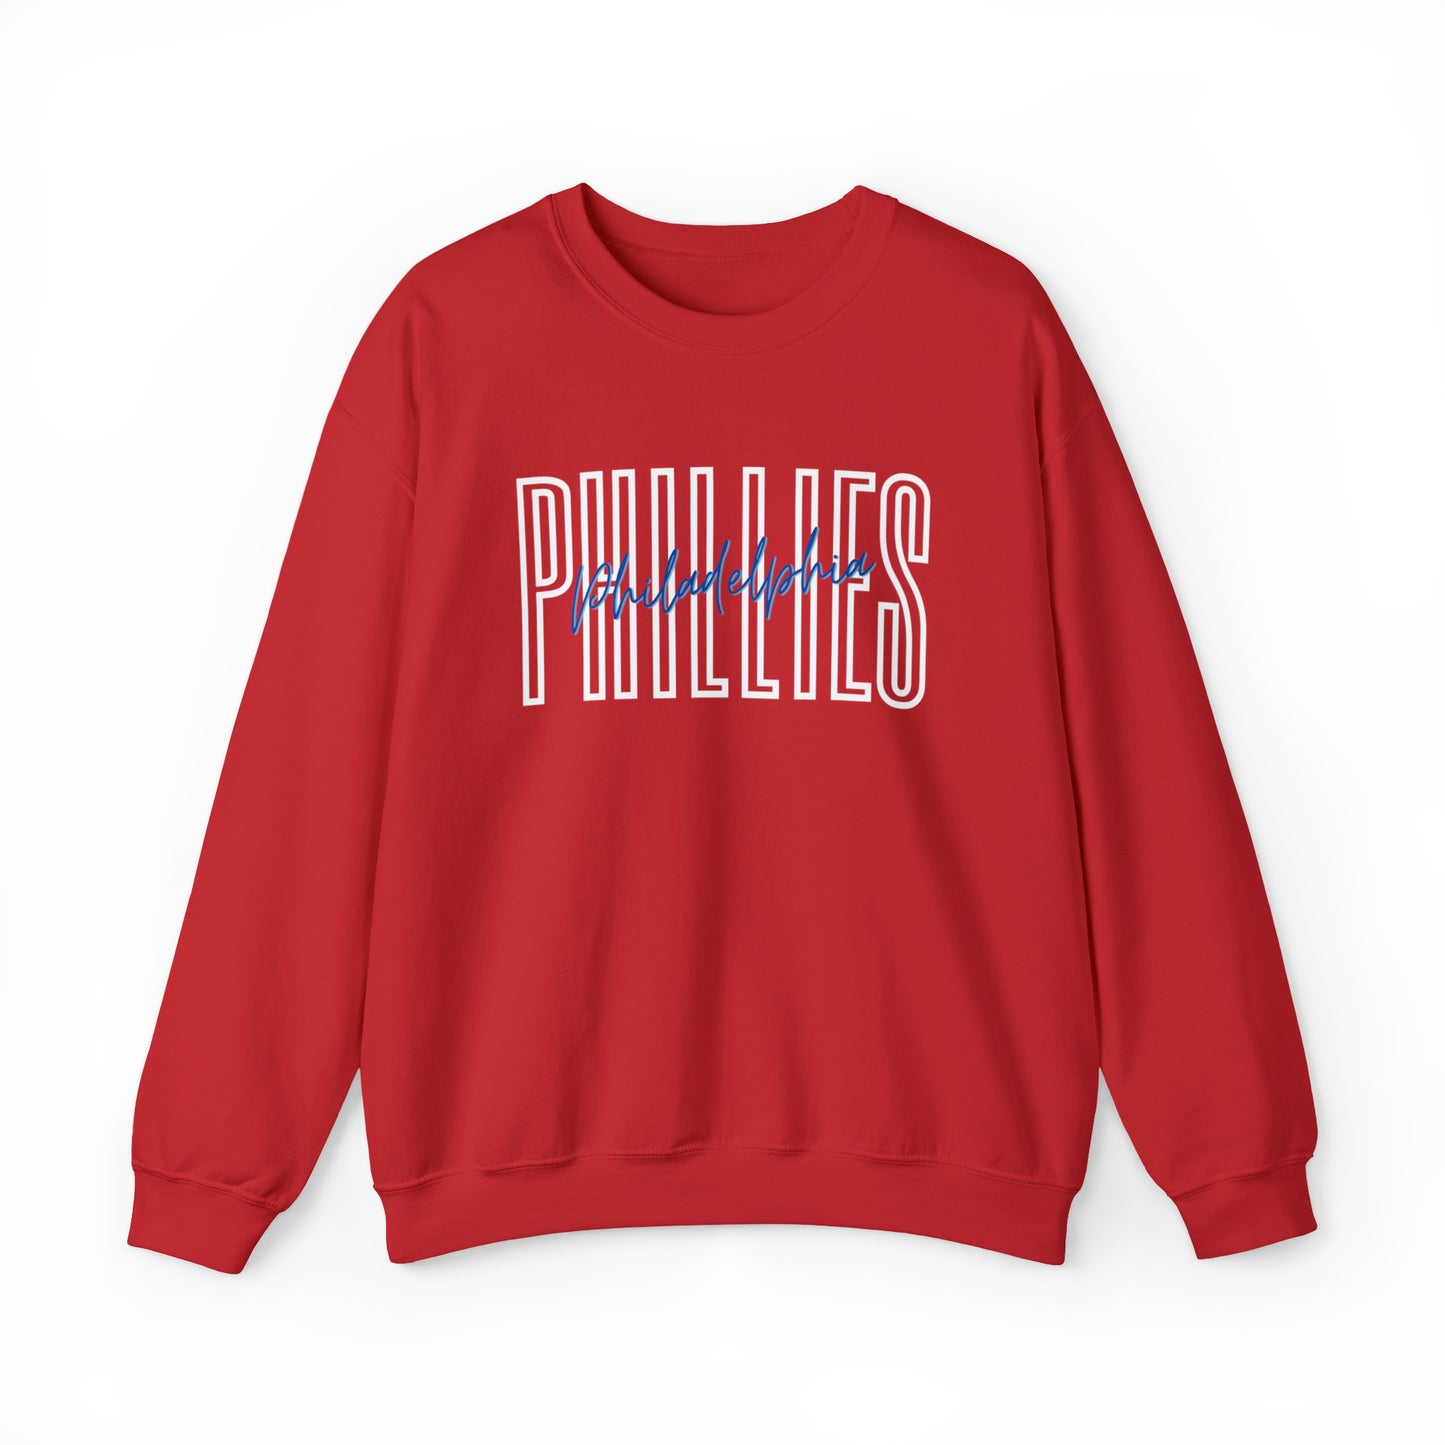 Philadelphia Phillies - Unisex Crewneck Sweatshirt